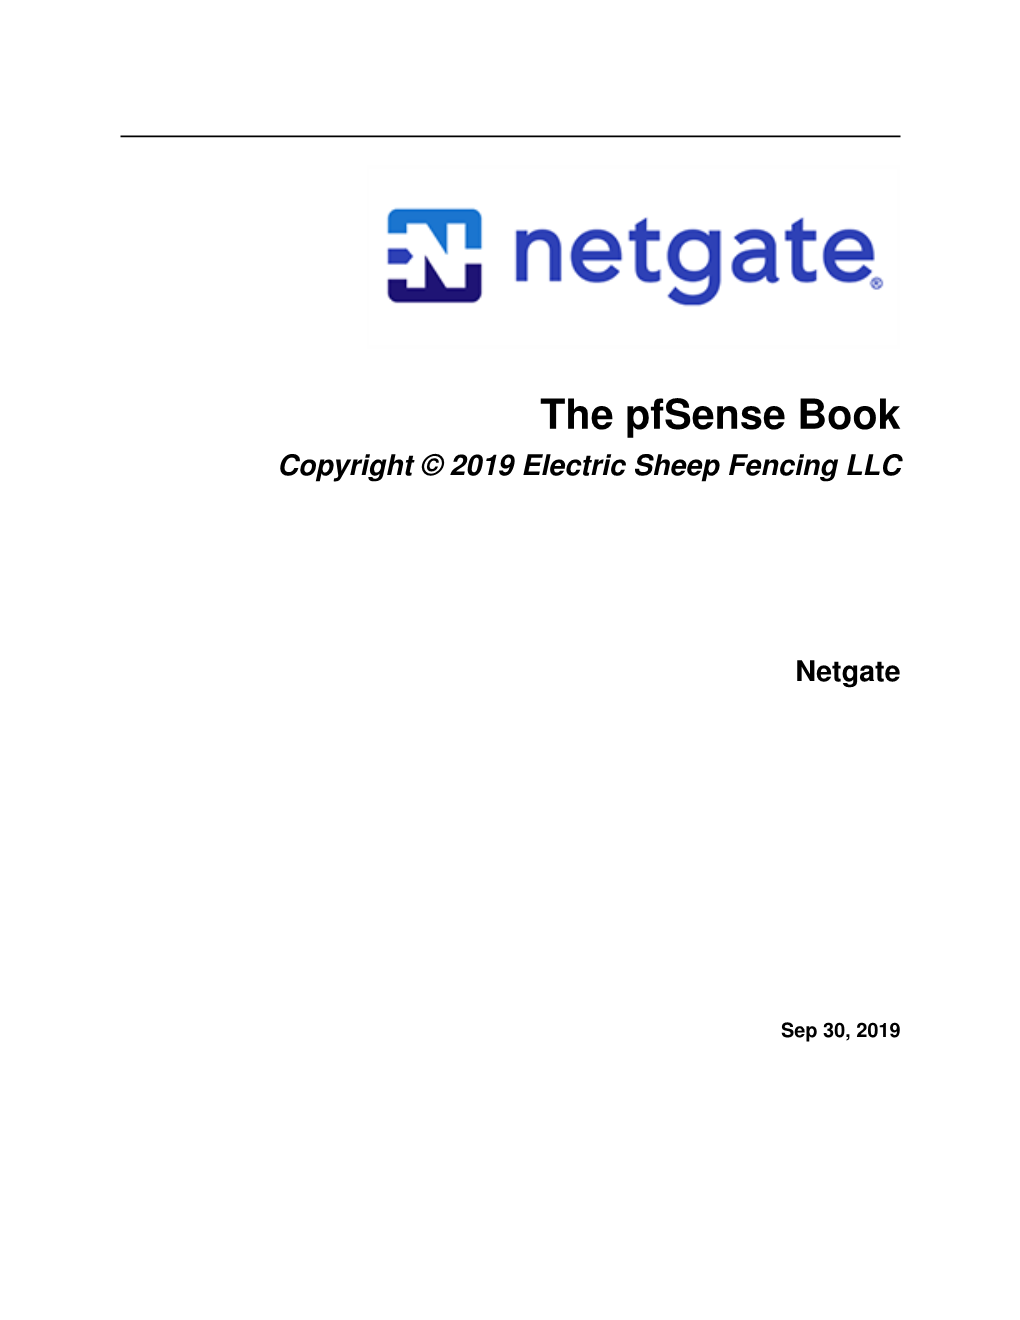 The Pfsense Book Copyright © 2019 Electric Sheep Fencing LLC